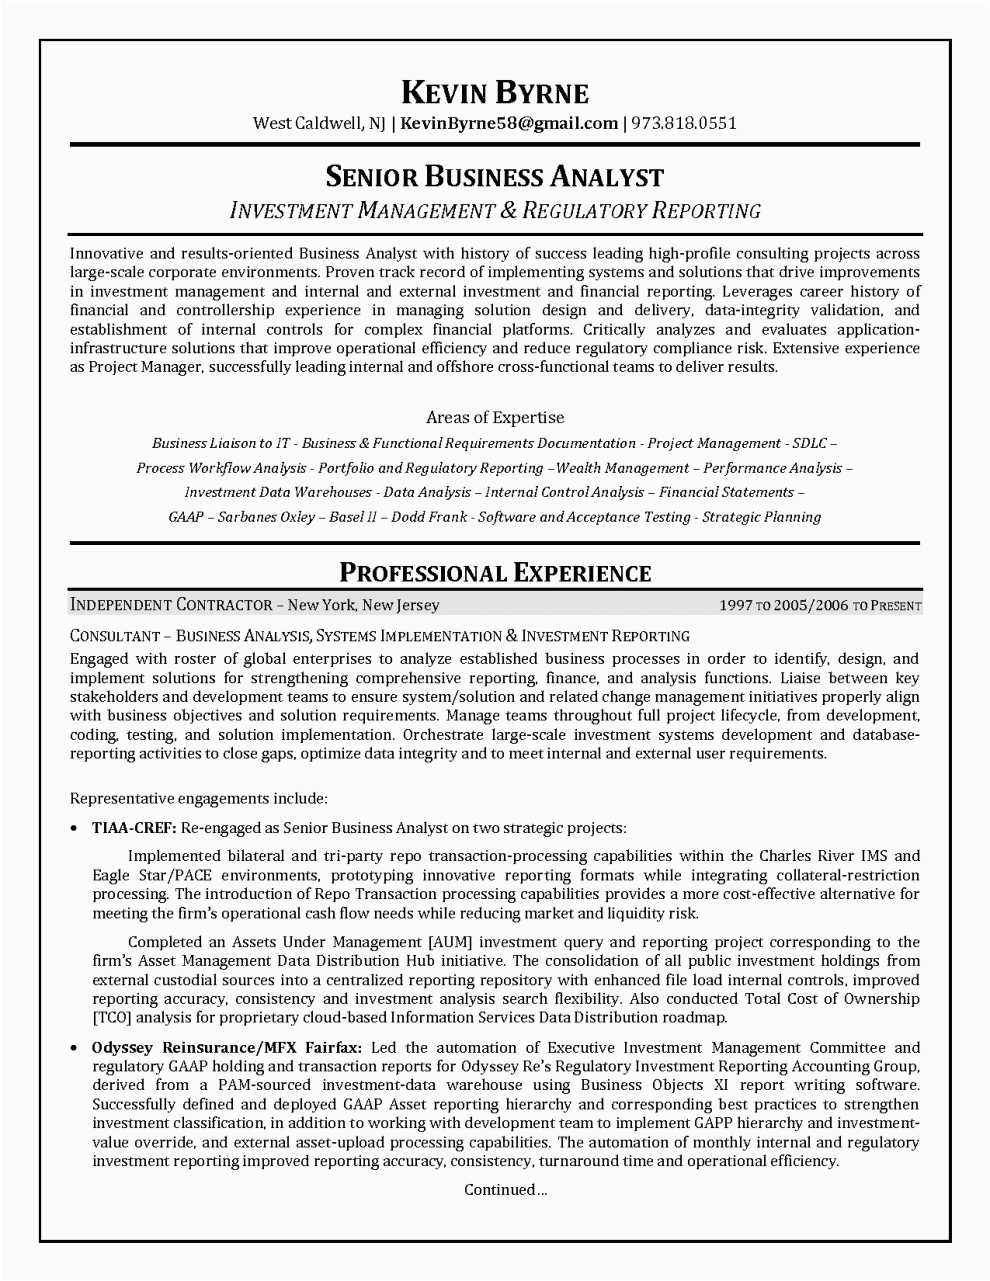 Senior Business Analyst Resume Sample Pdf Resume Senior Business Analyst Resume format Business